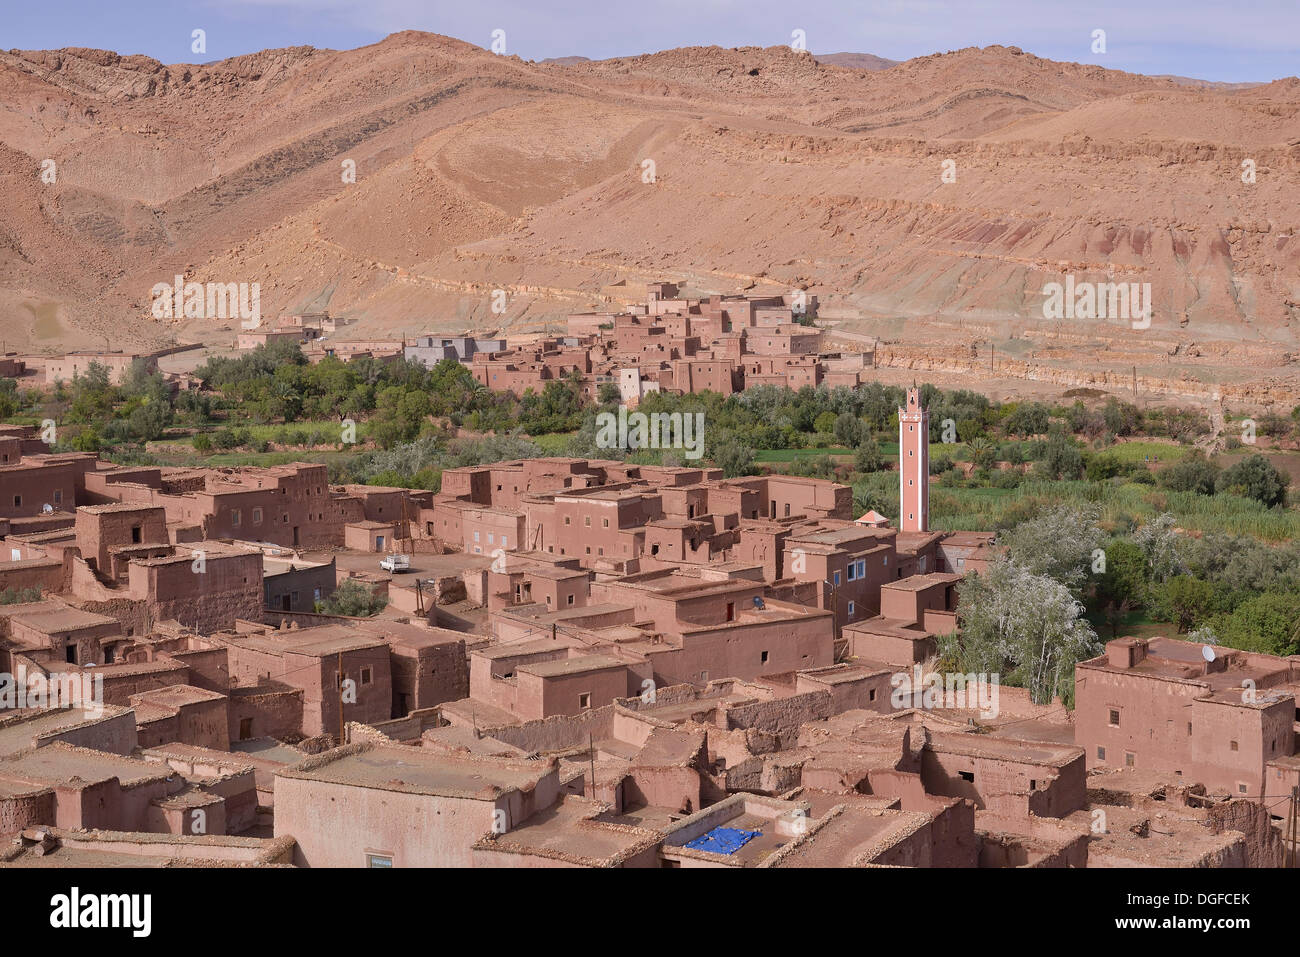 Ksar, ciudad fortificada, Camino de las Kasbahs, Ounila-Tal, cerca de Aït-Ben-Haddou, región de Souss-Massa-Draâ, Marruecos Foto de stock